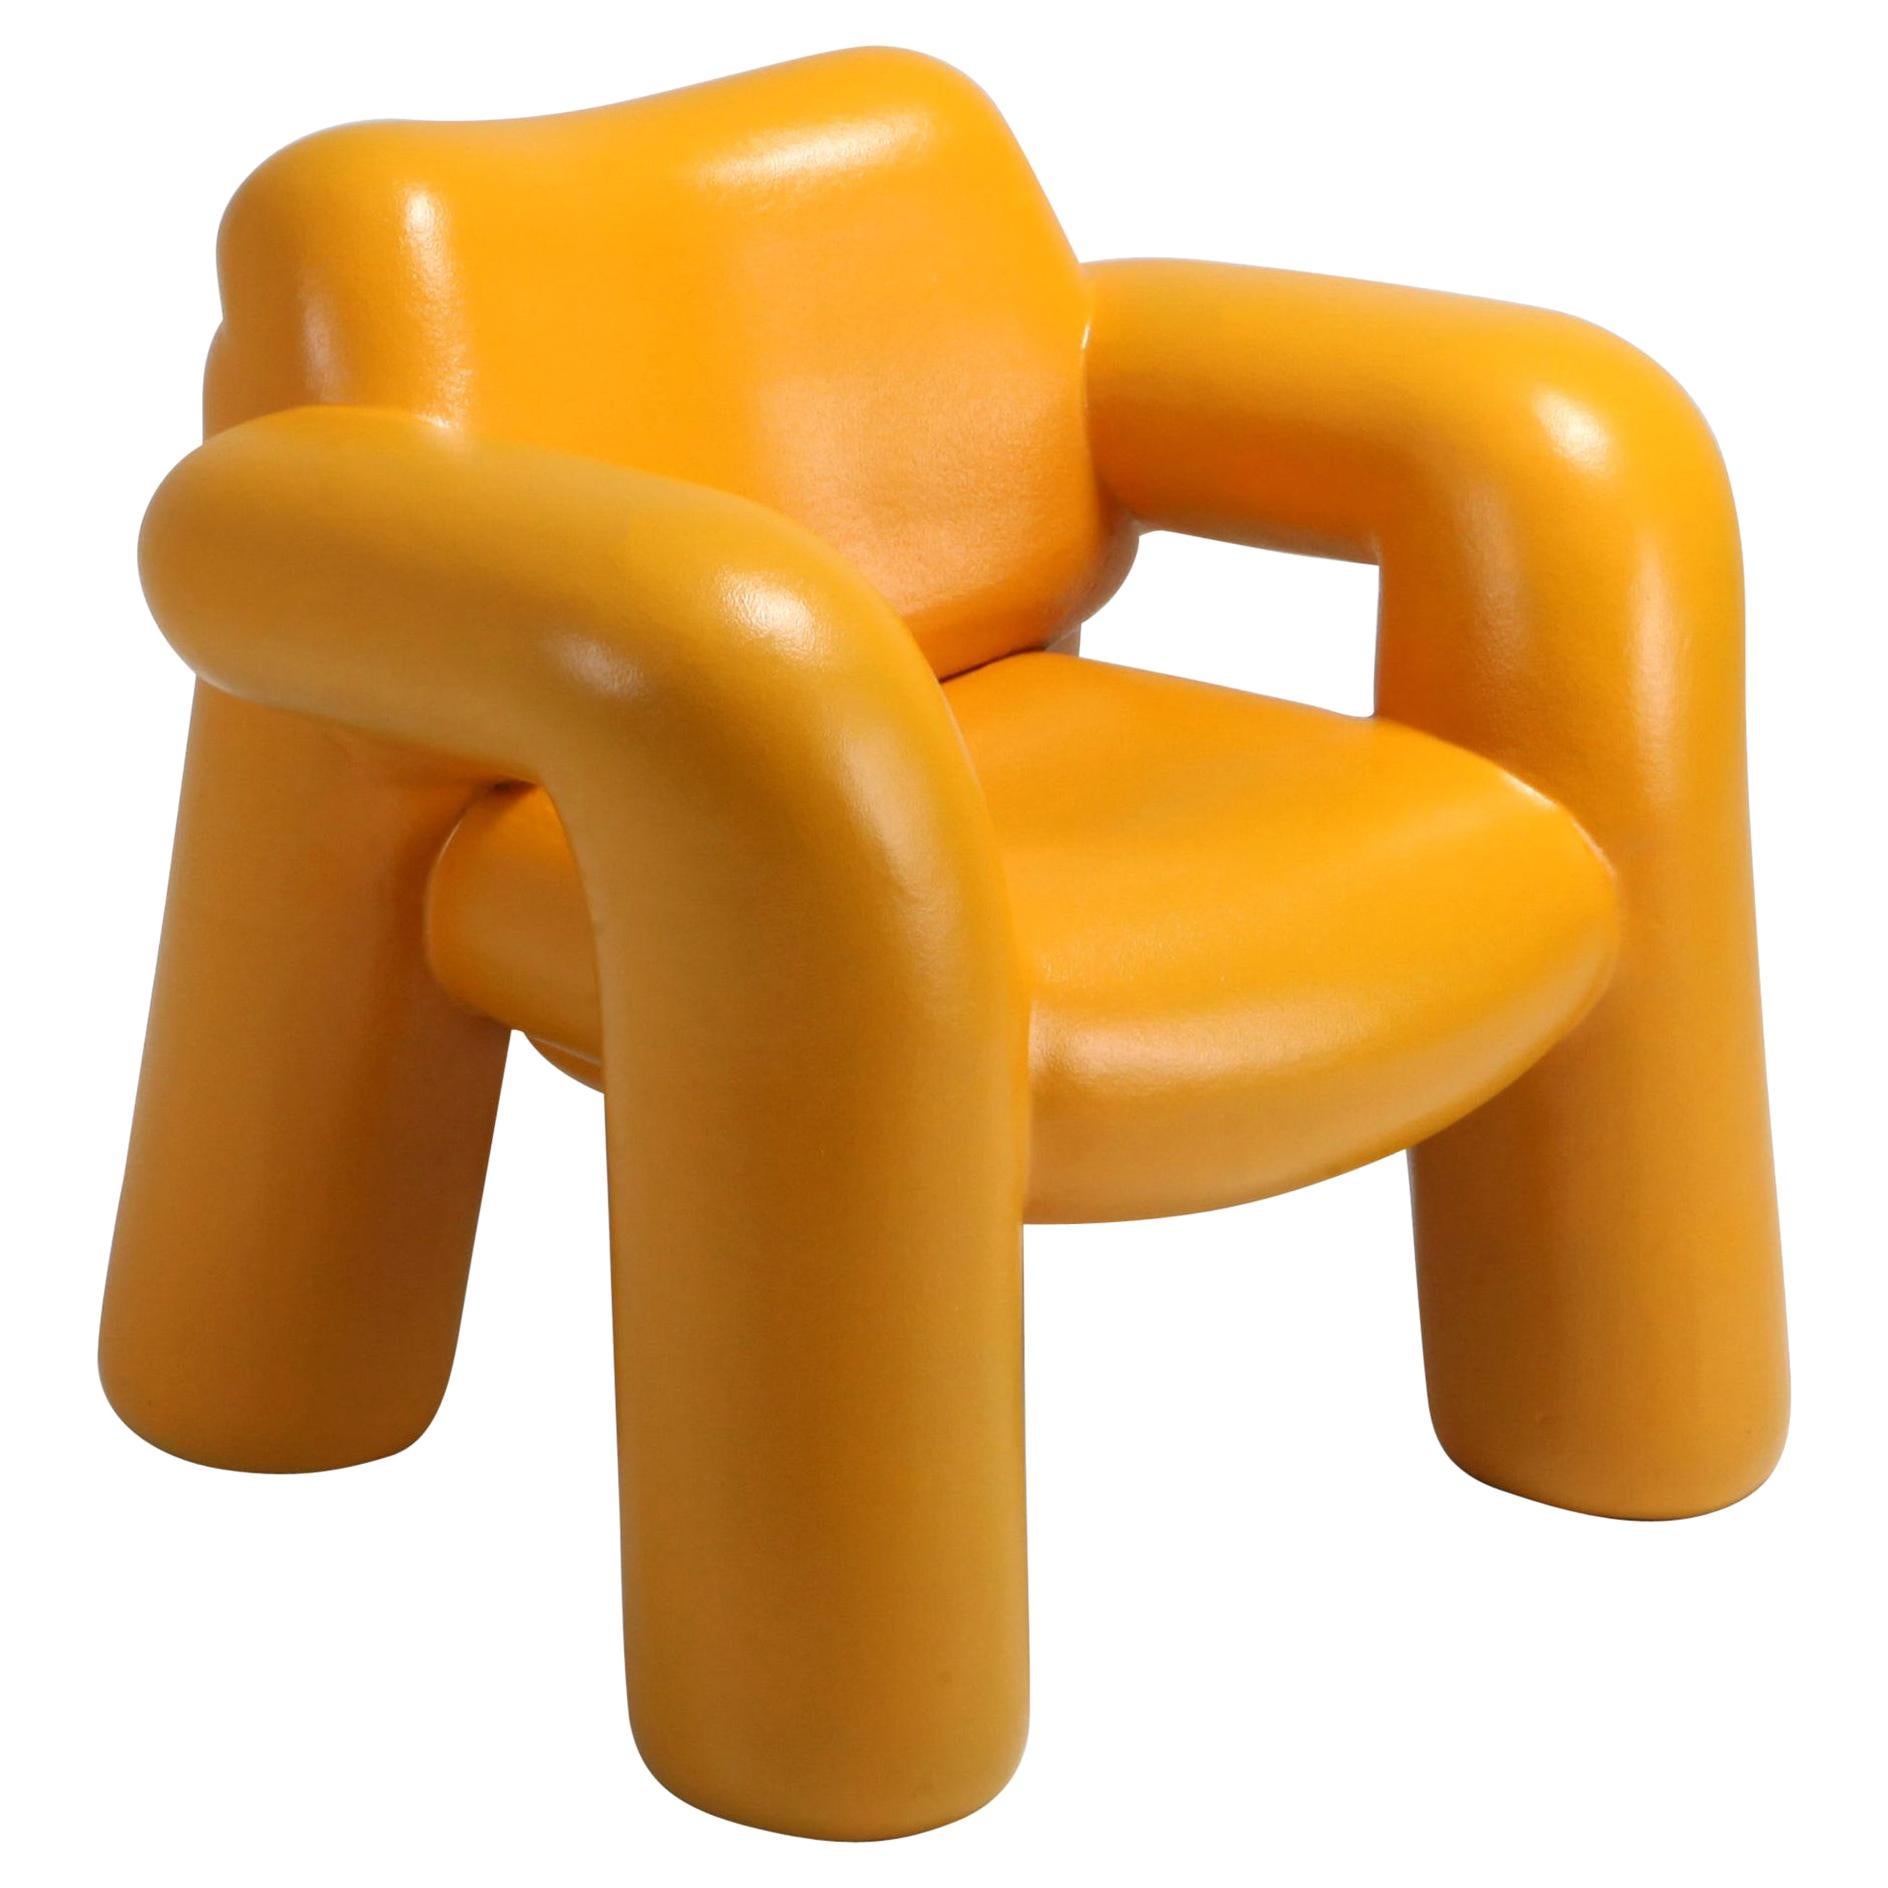 Blown-Up Chair by Schimmel & Schweikle 